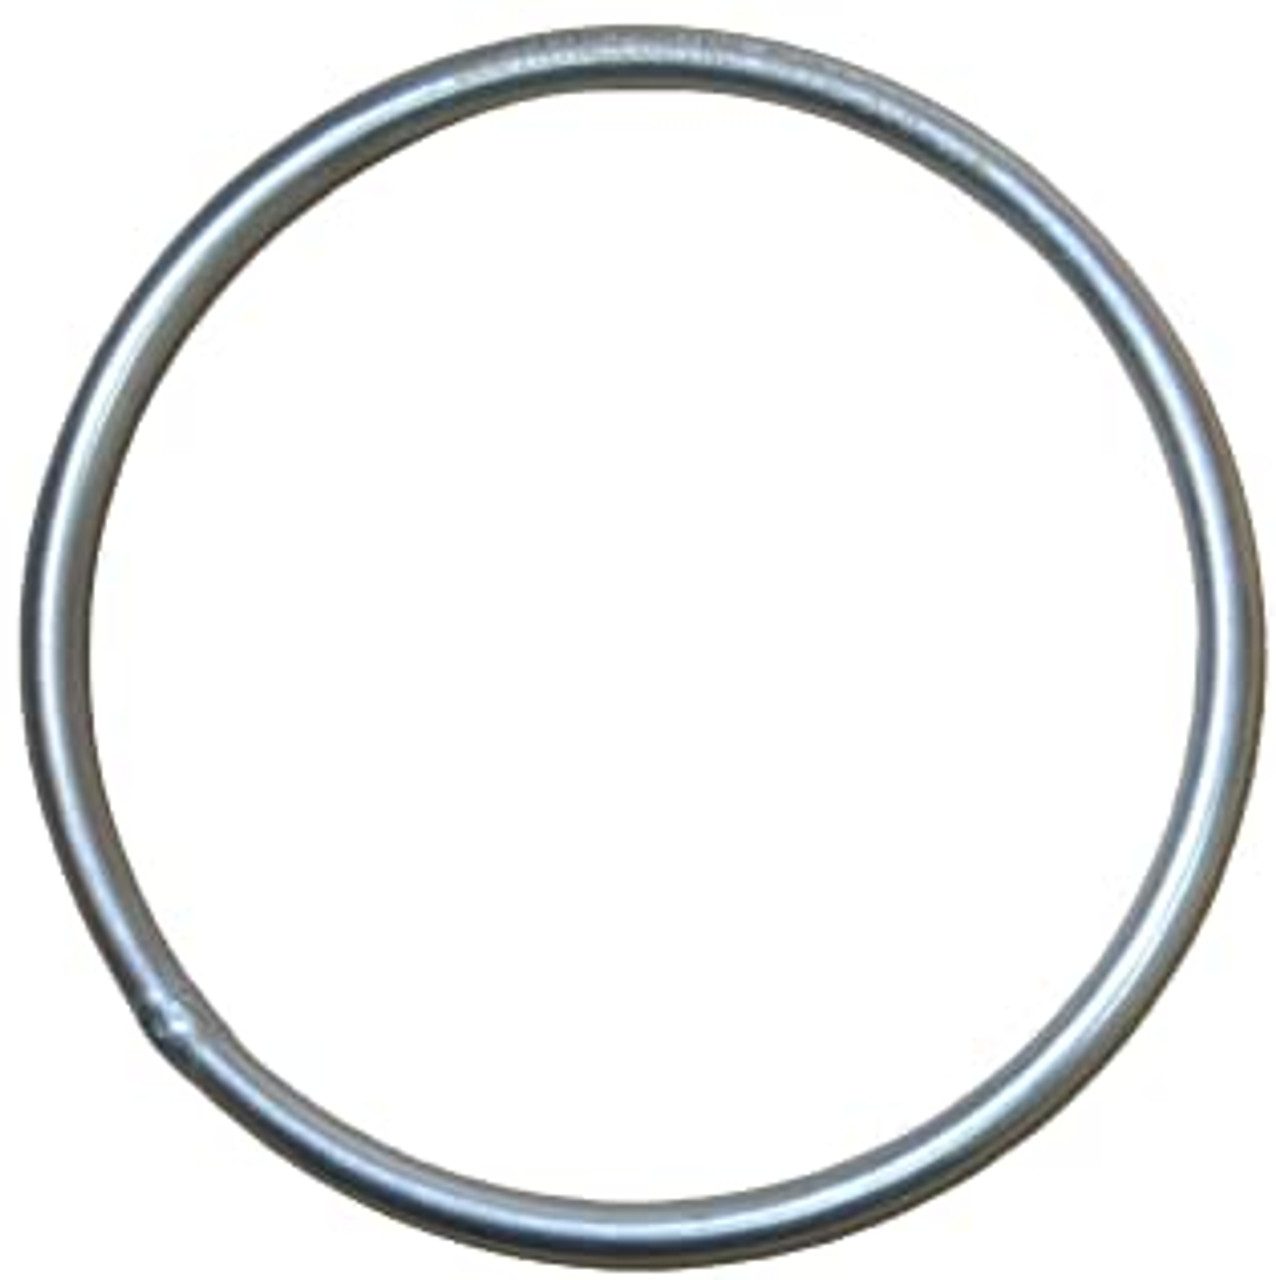 Stainless Steel Round Ring 316 Marine Grade